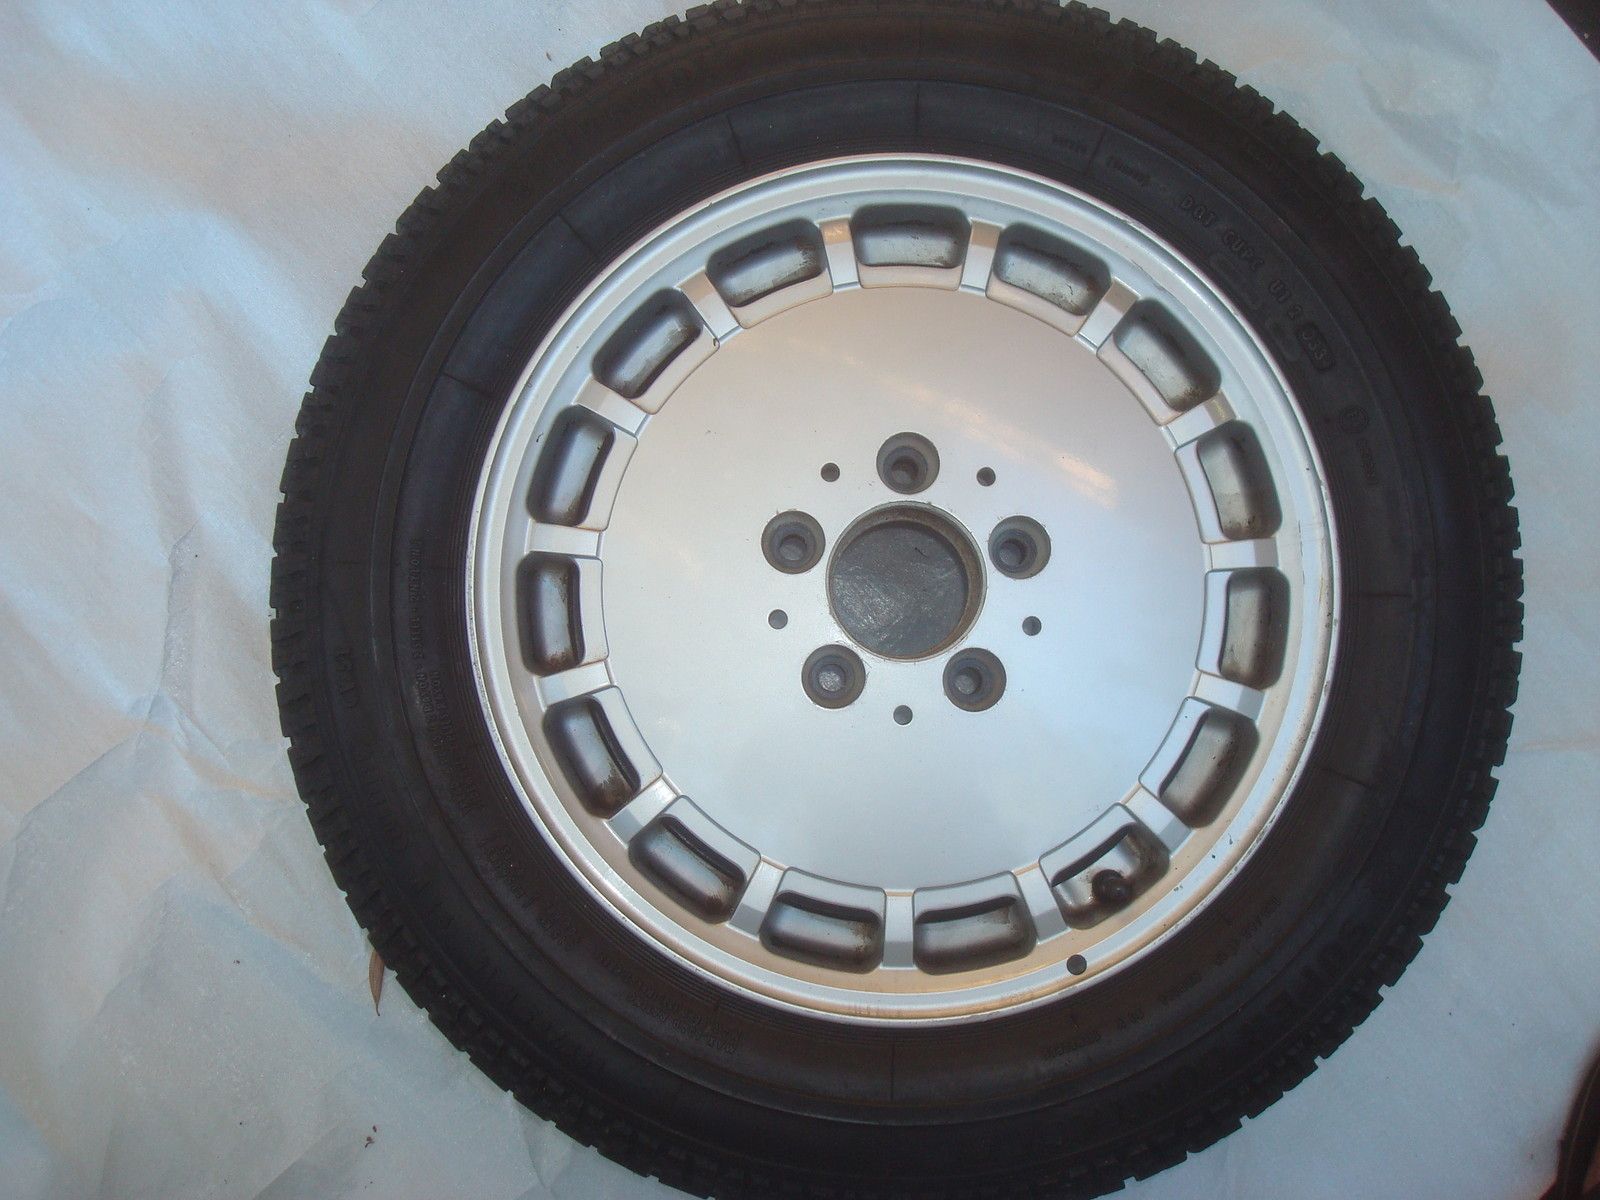 Mercedes W124 Spare Alloy Wheel Rim Tire 1244010702 6 5JX15H2 195 65